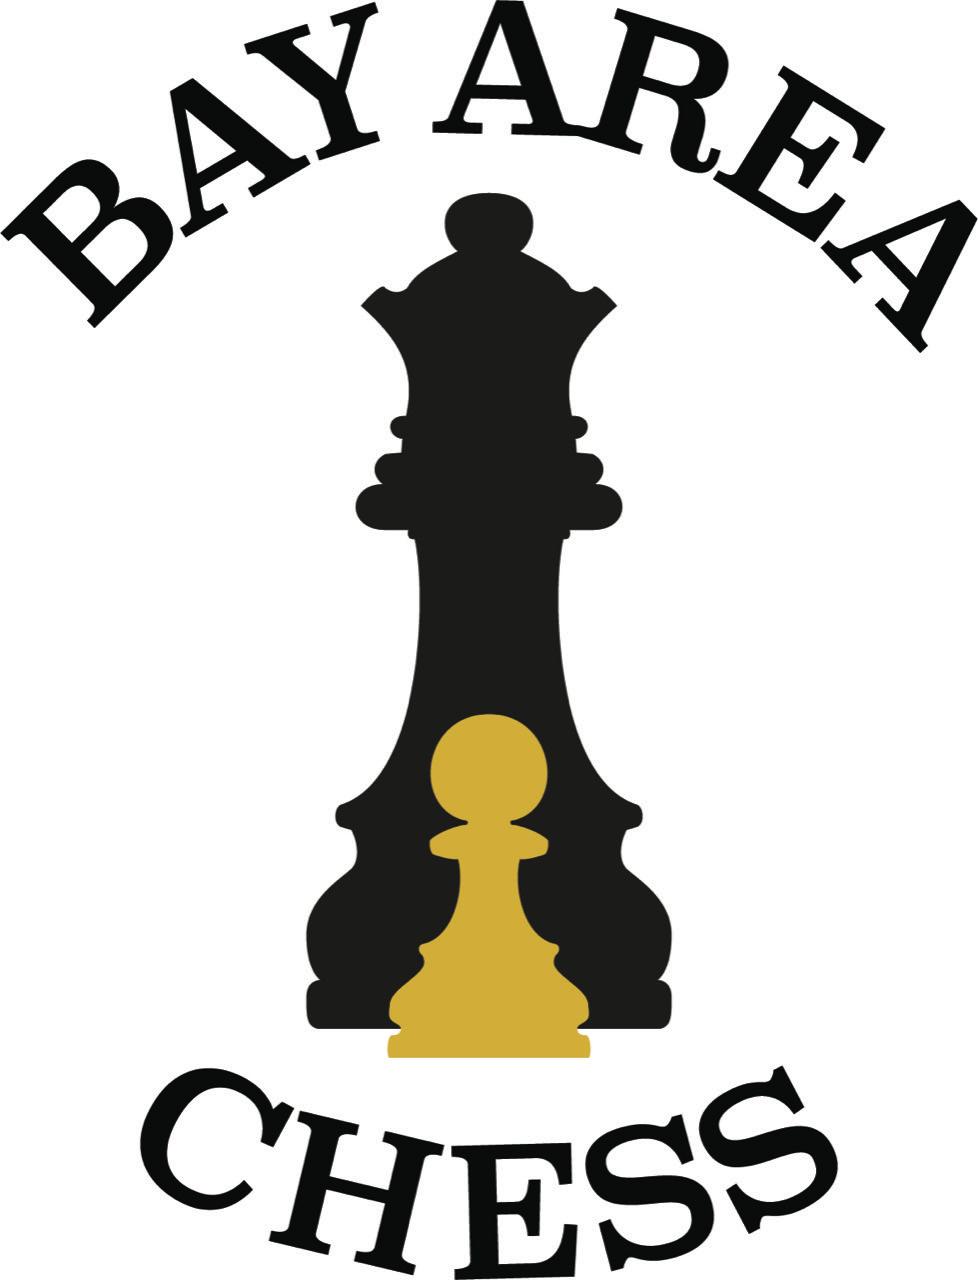 Bay Area Chess